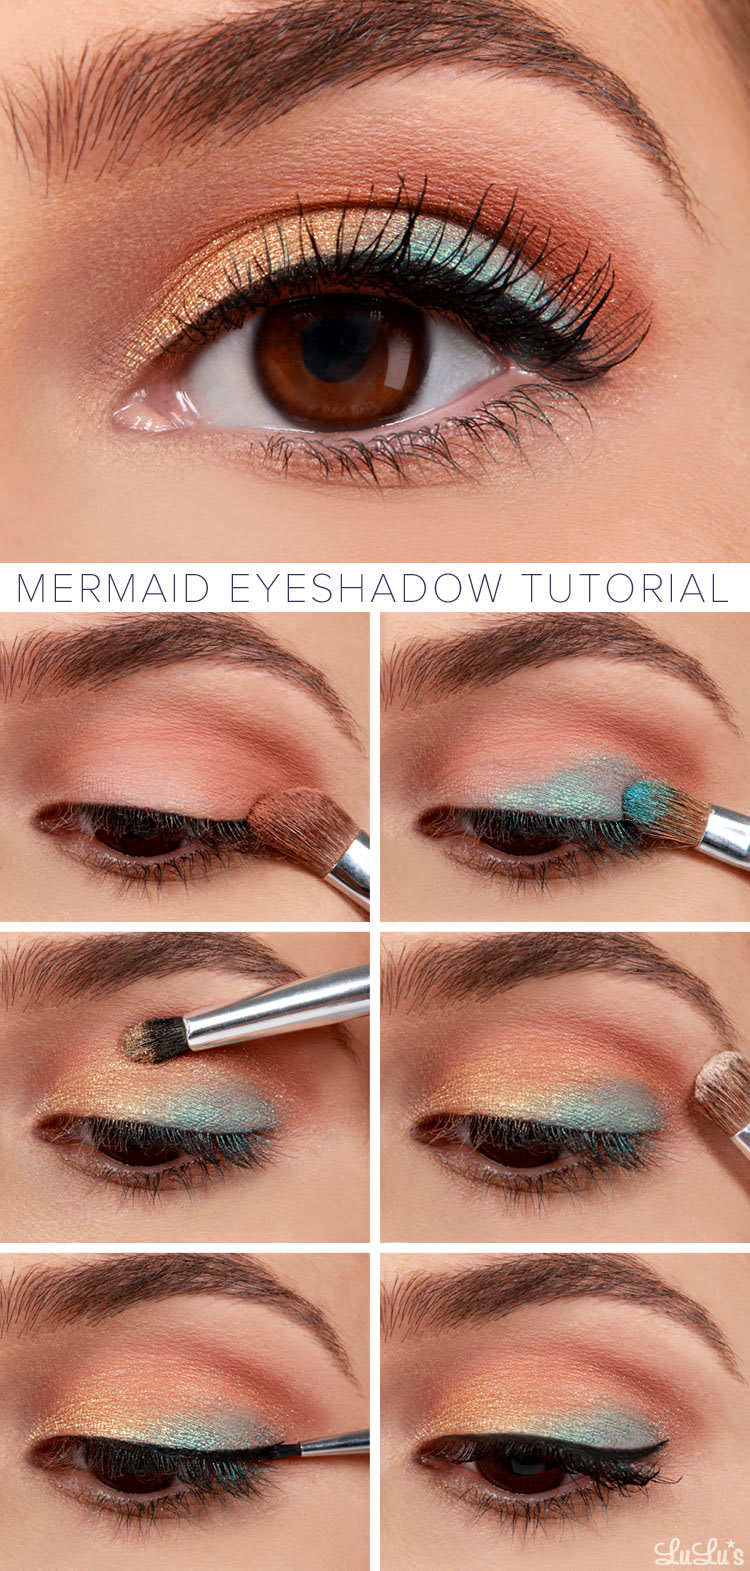 Lulus How-To: Mermaid Eyeshadow Makeup Tutorial - Lulus.com Fashion Blog